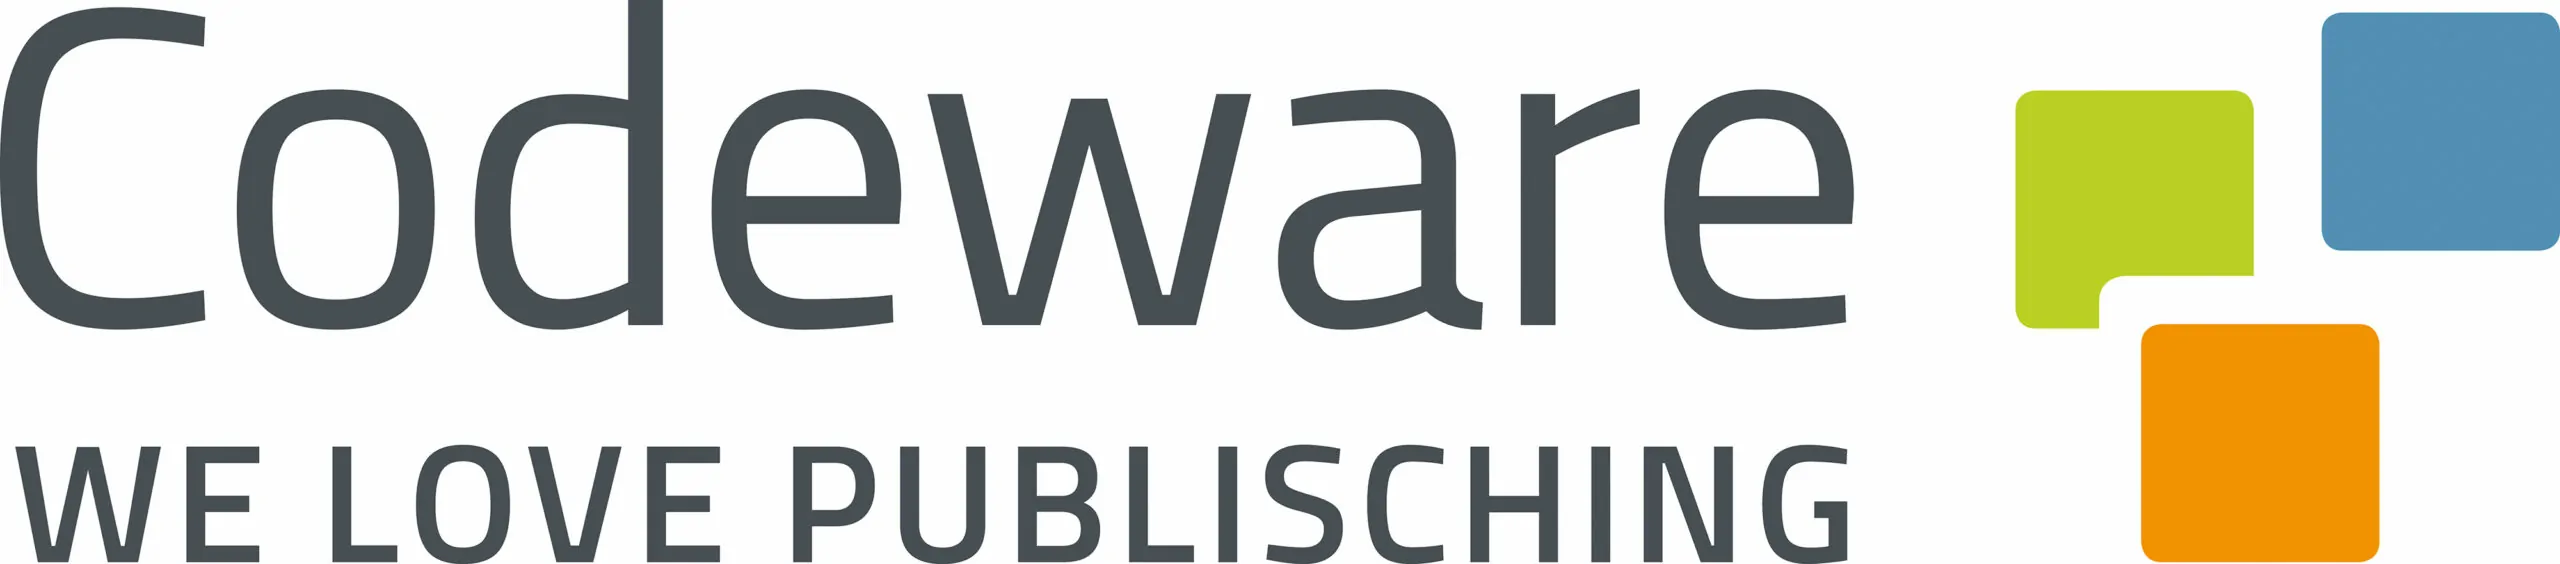 Codeware Logo